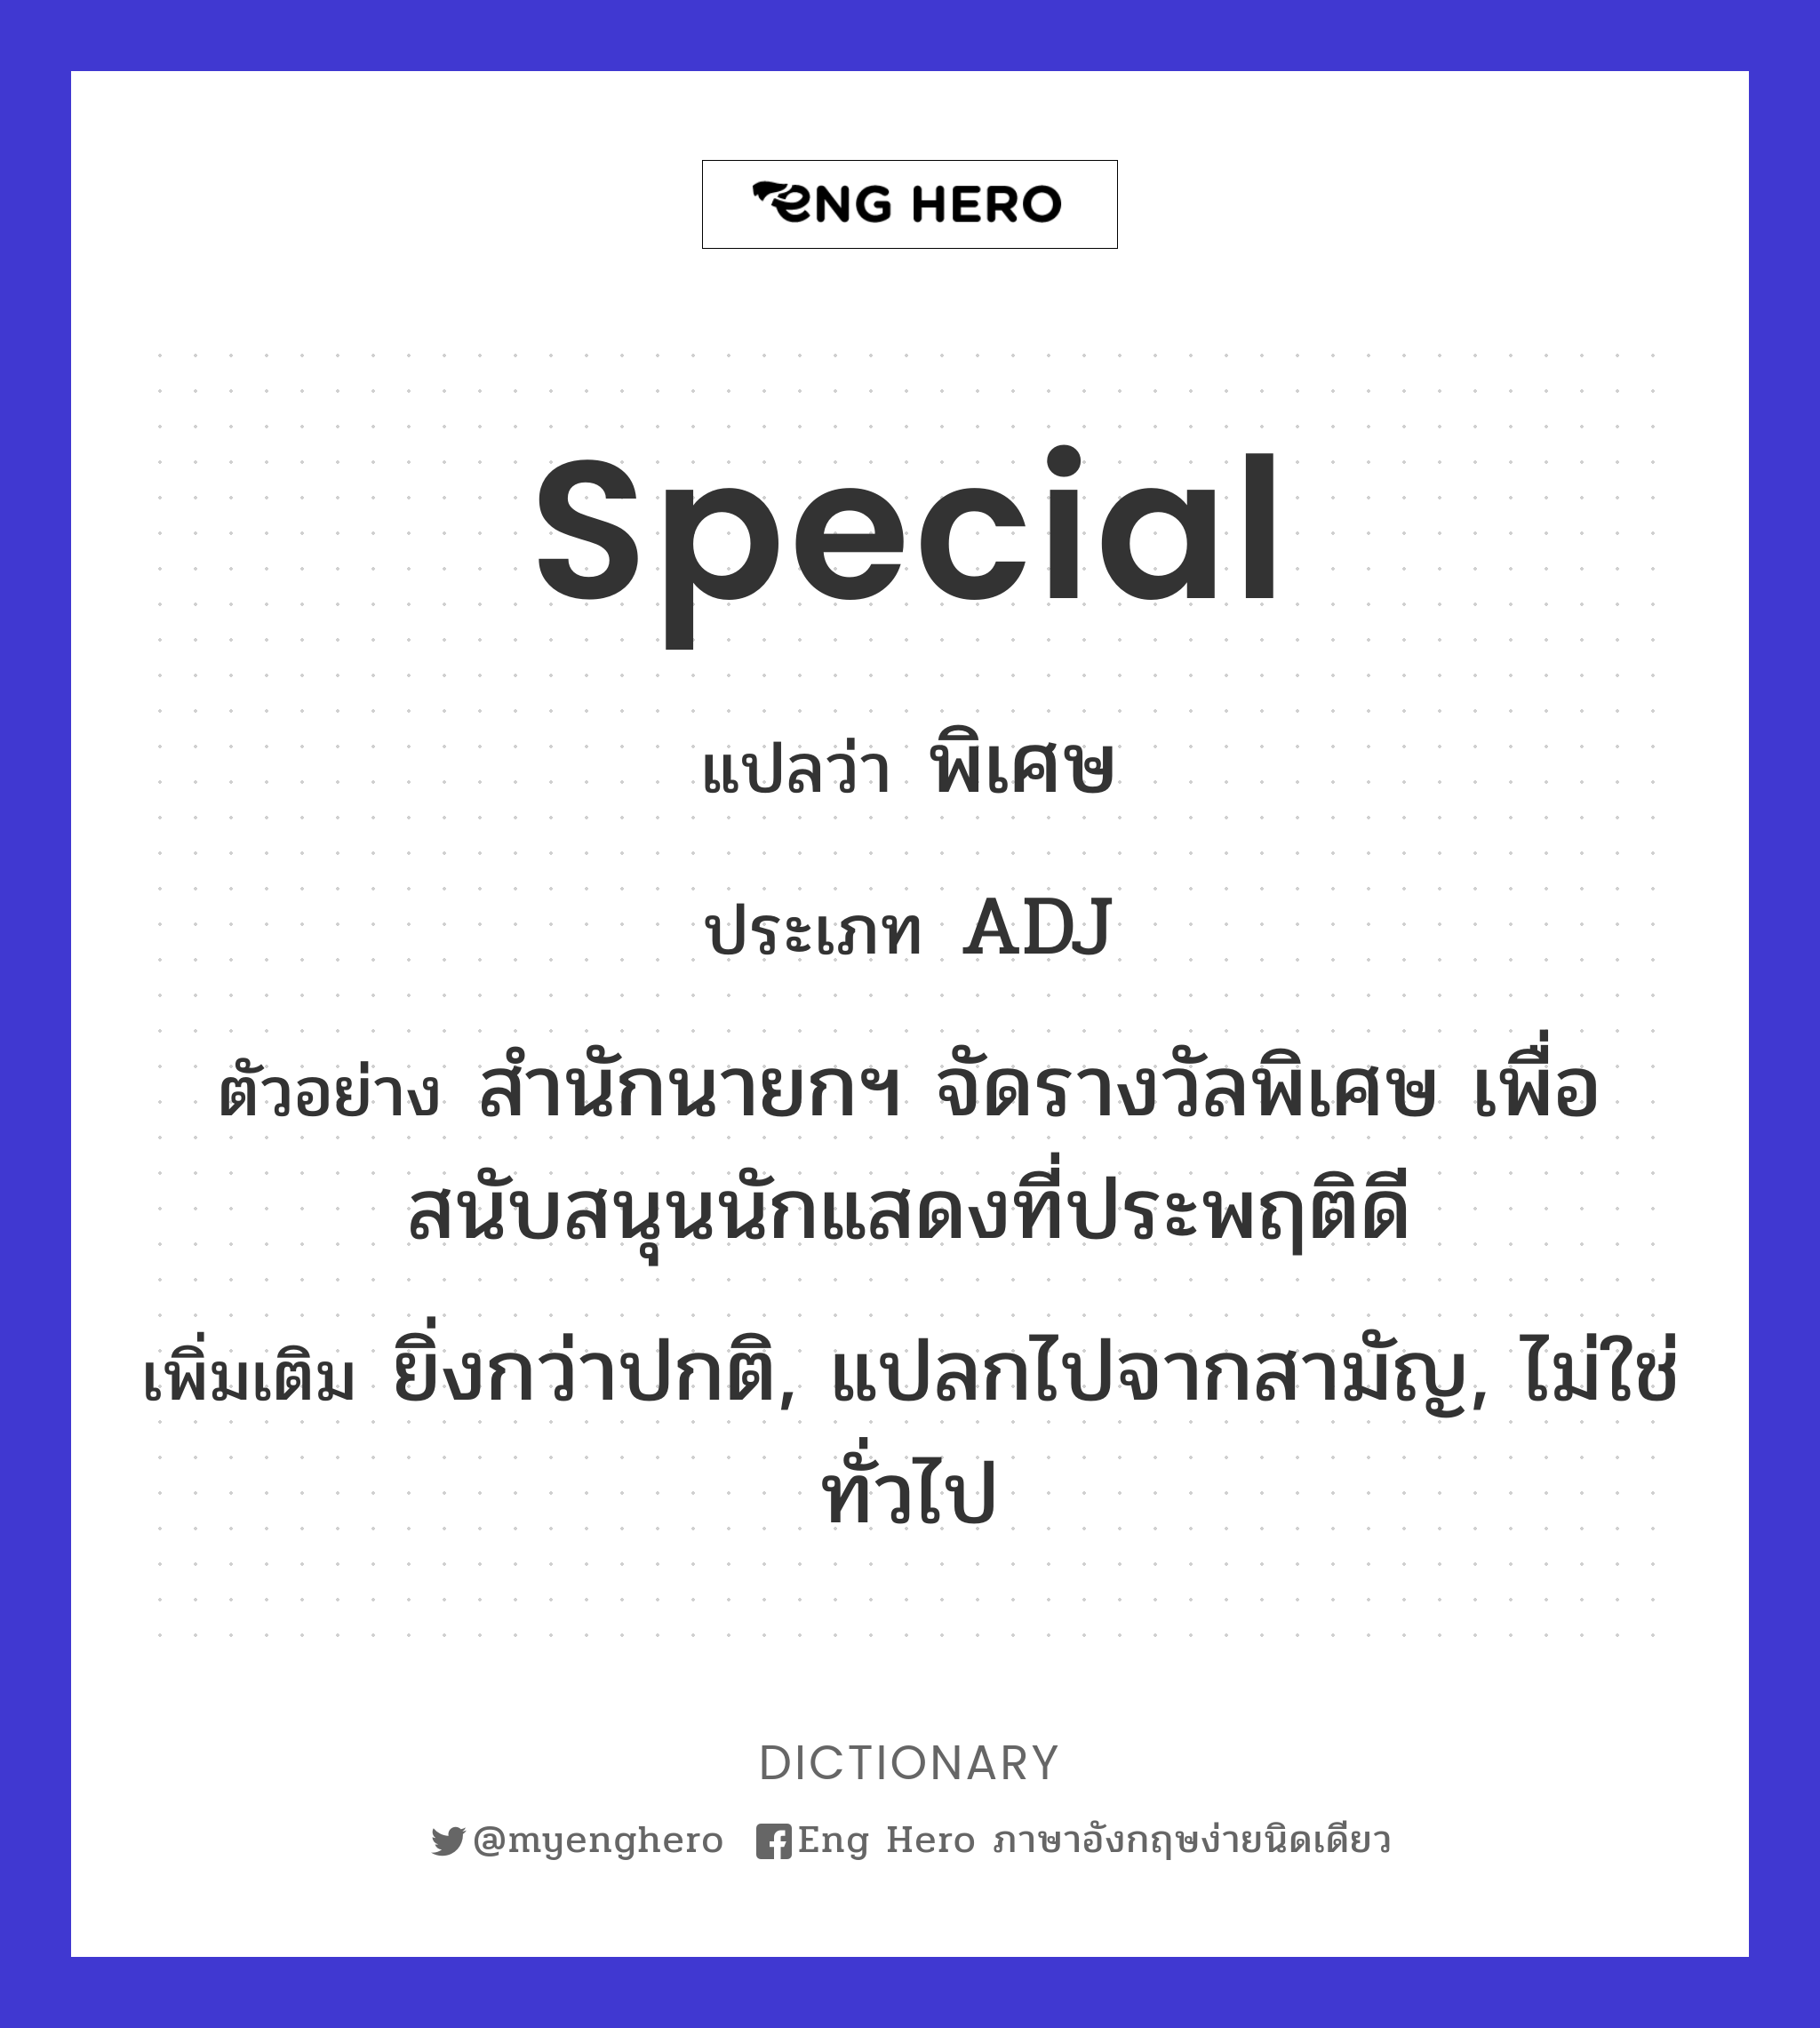 special